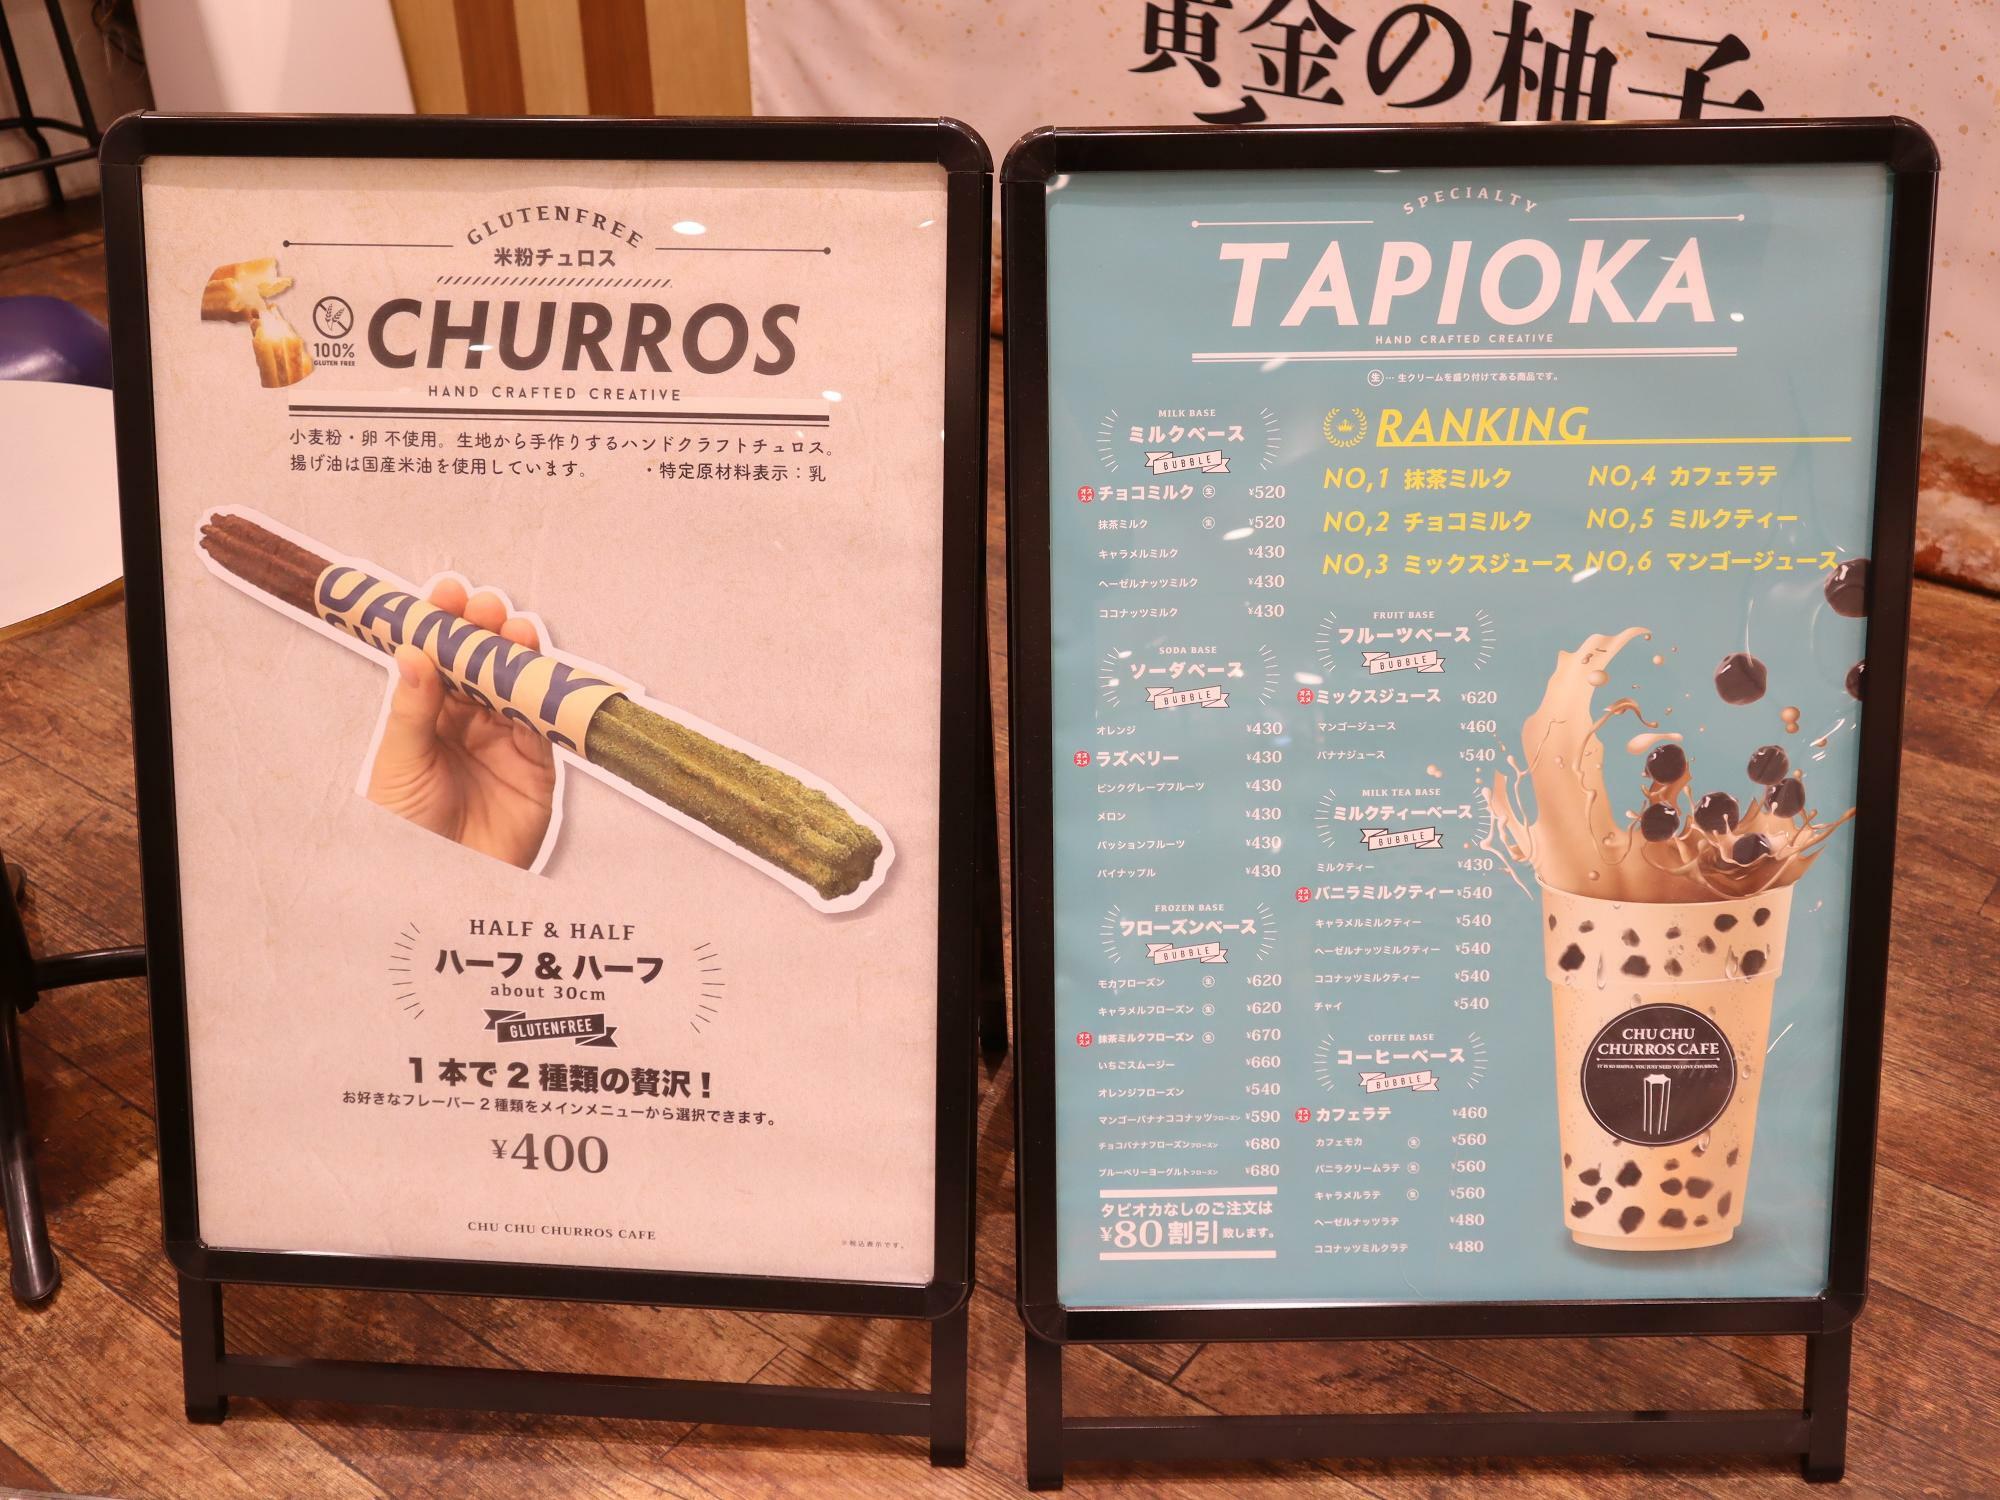 「CHU CHU CHURROS CAFE」のチュロスには「グルテンフリー」の文字が記載されている。